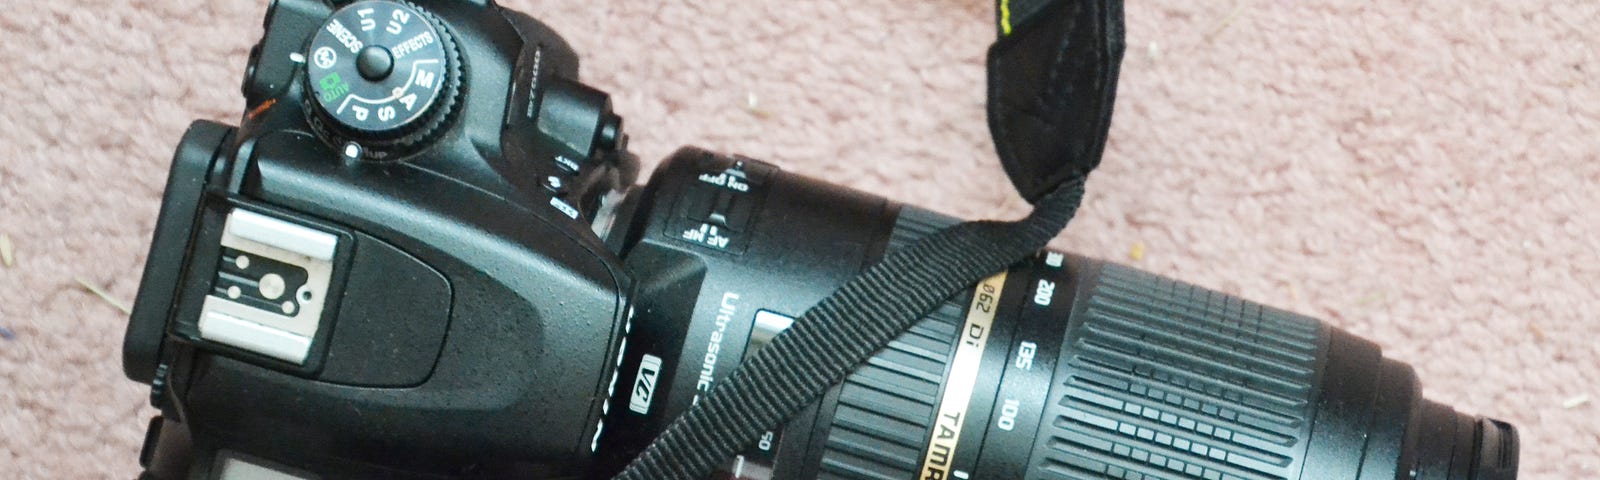 DSLR camera with 300mm lens